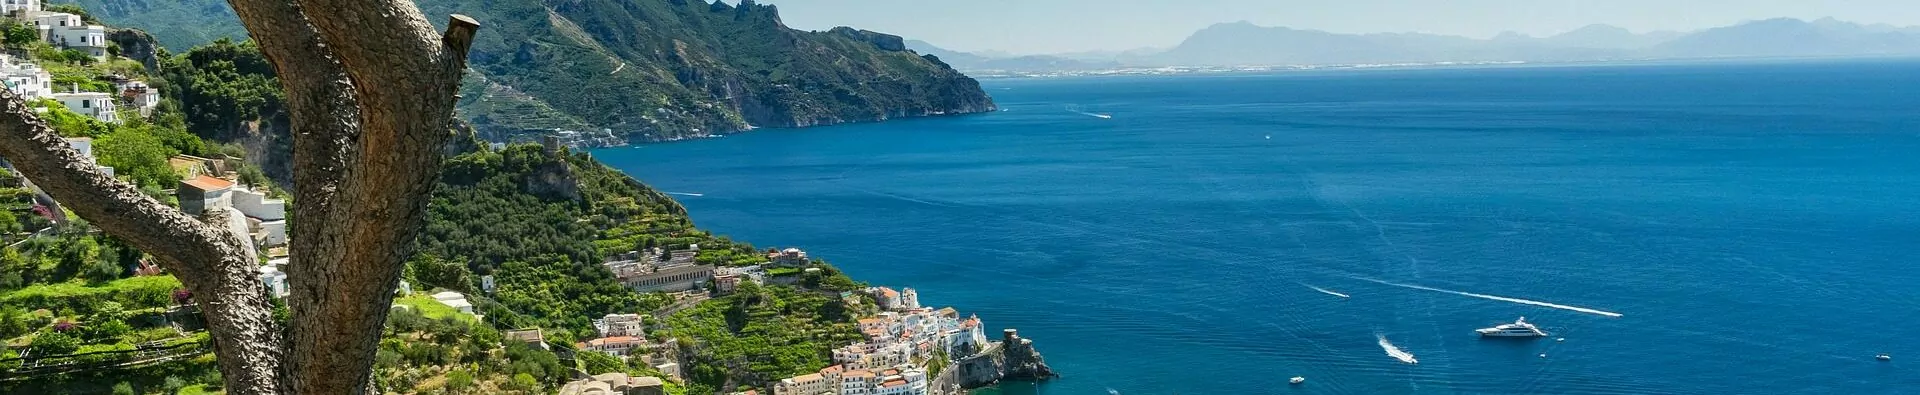 Mediterranean hiking trips, sea, amalfi coast, Italy, sun, warm, hiking, walking tours, guided tours